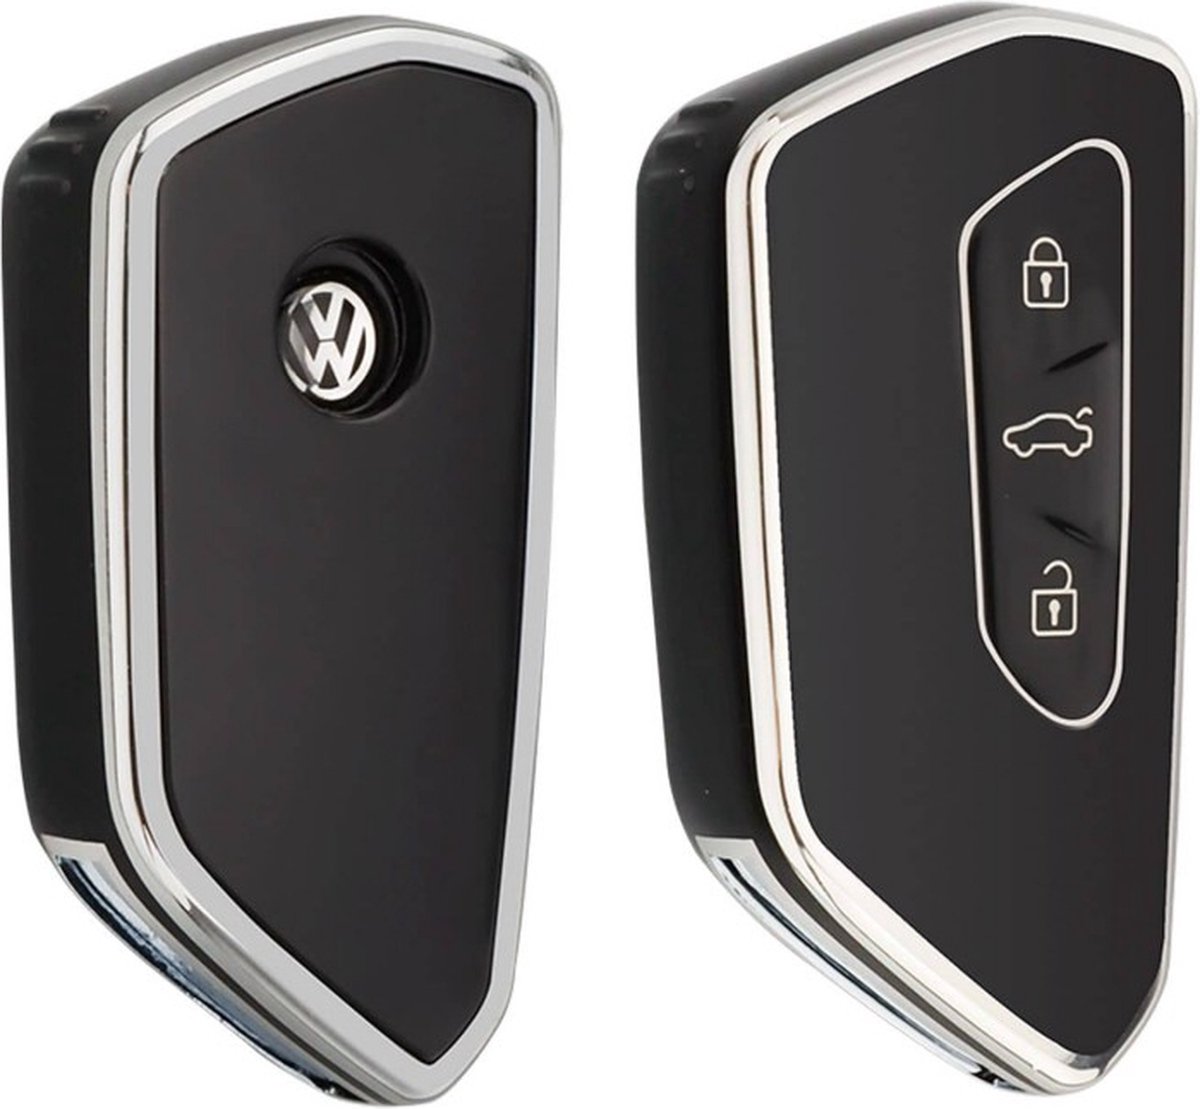 VW Autosleutel hoesje TPU Sleutelhoesje - Sleutelcover - Autosleutelhoes Geschikt voor Volkswagen, Seat, Skoda,Cupra - zwart G3 - Auto Sleutel Accessoires gadgets - Kado Cadeau man - vrouw